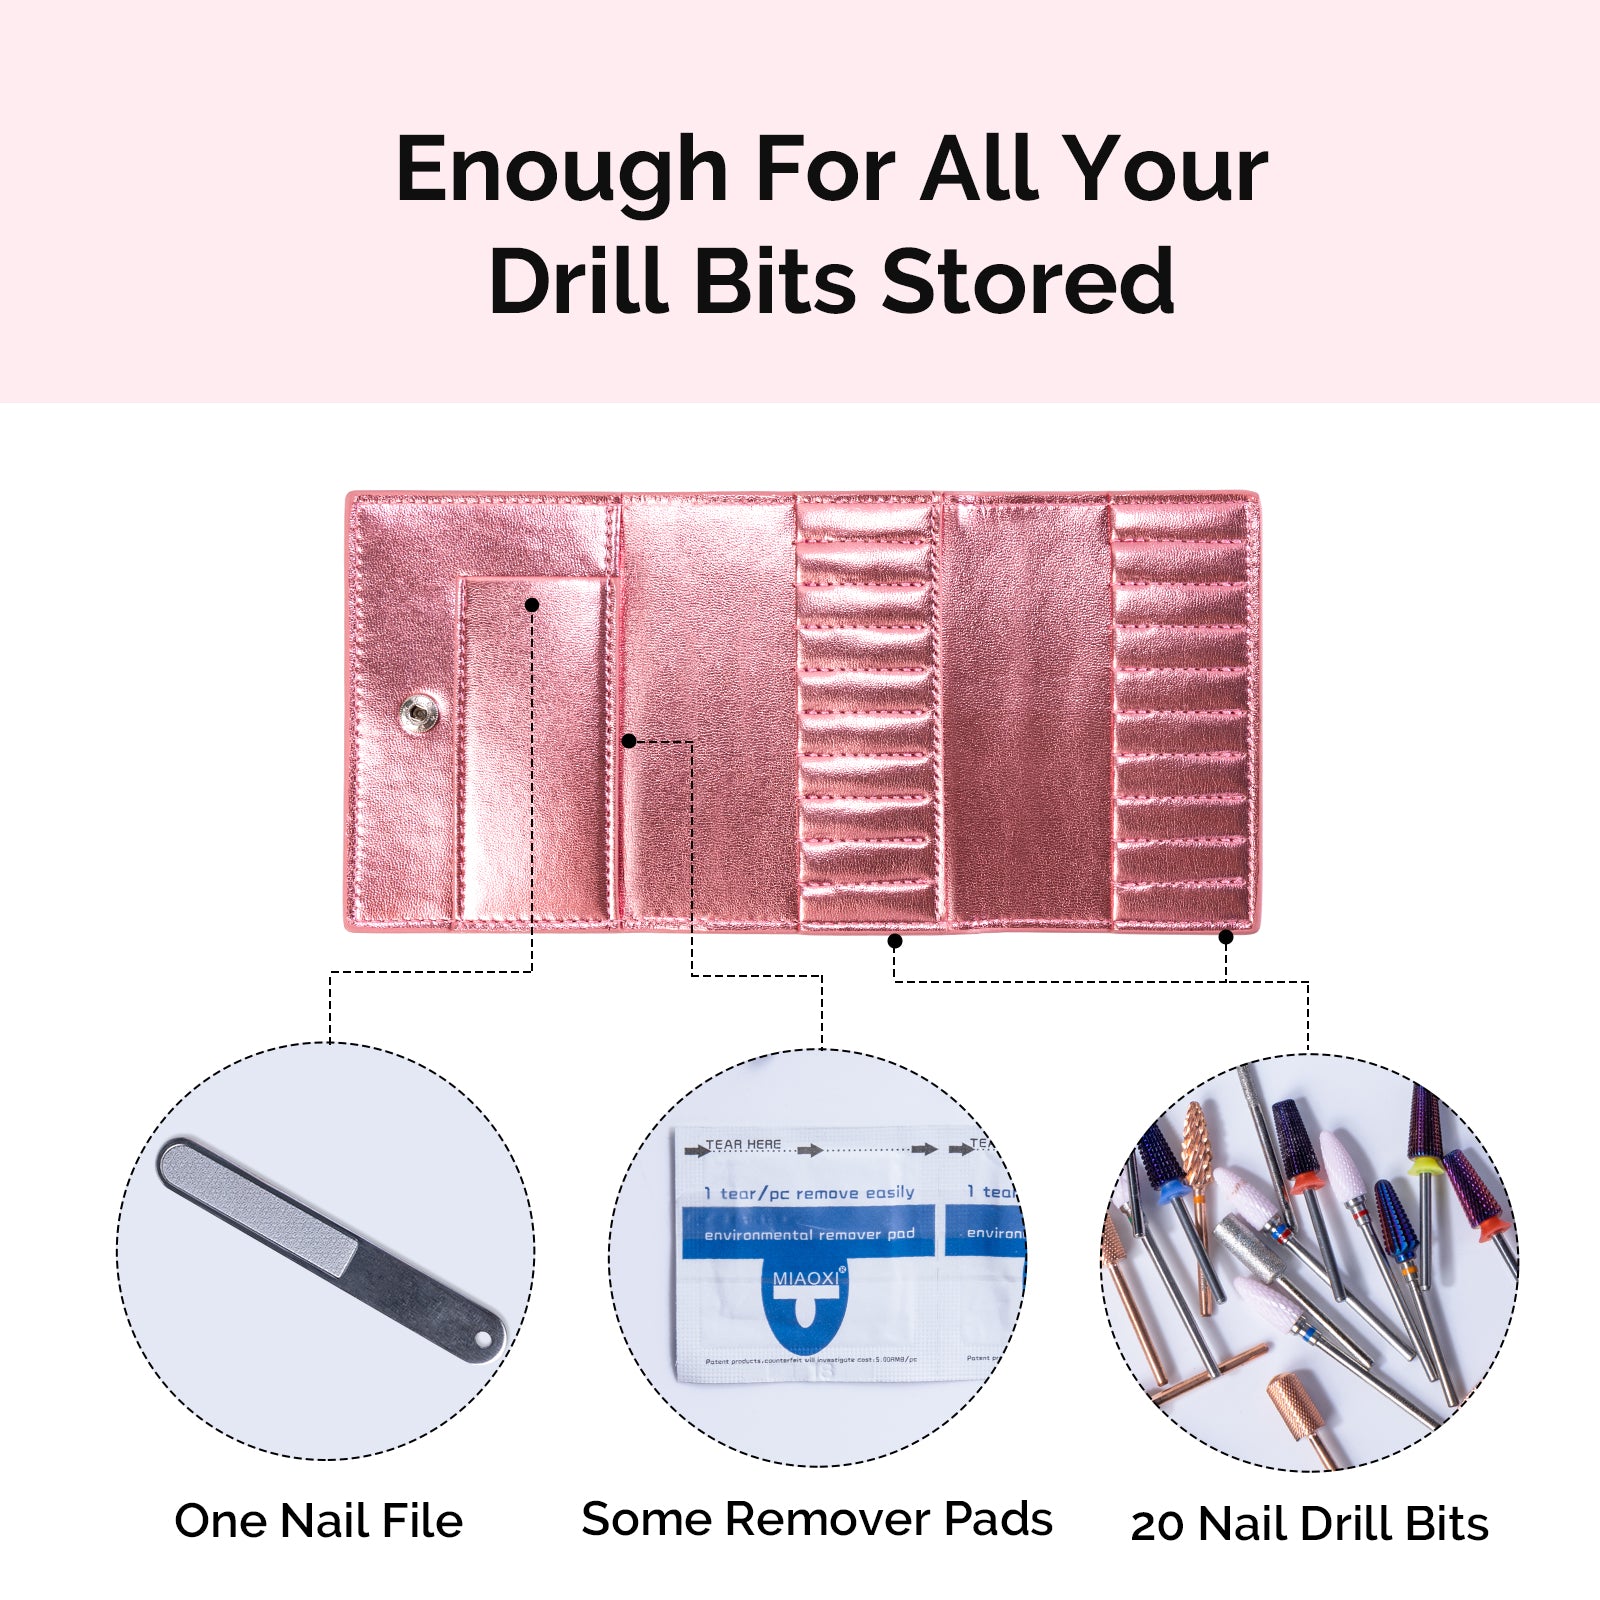 Nail Drill Bits Folding Storage Bag With Gift Box